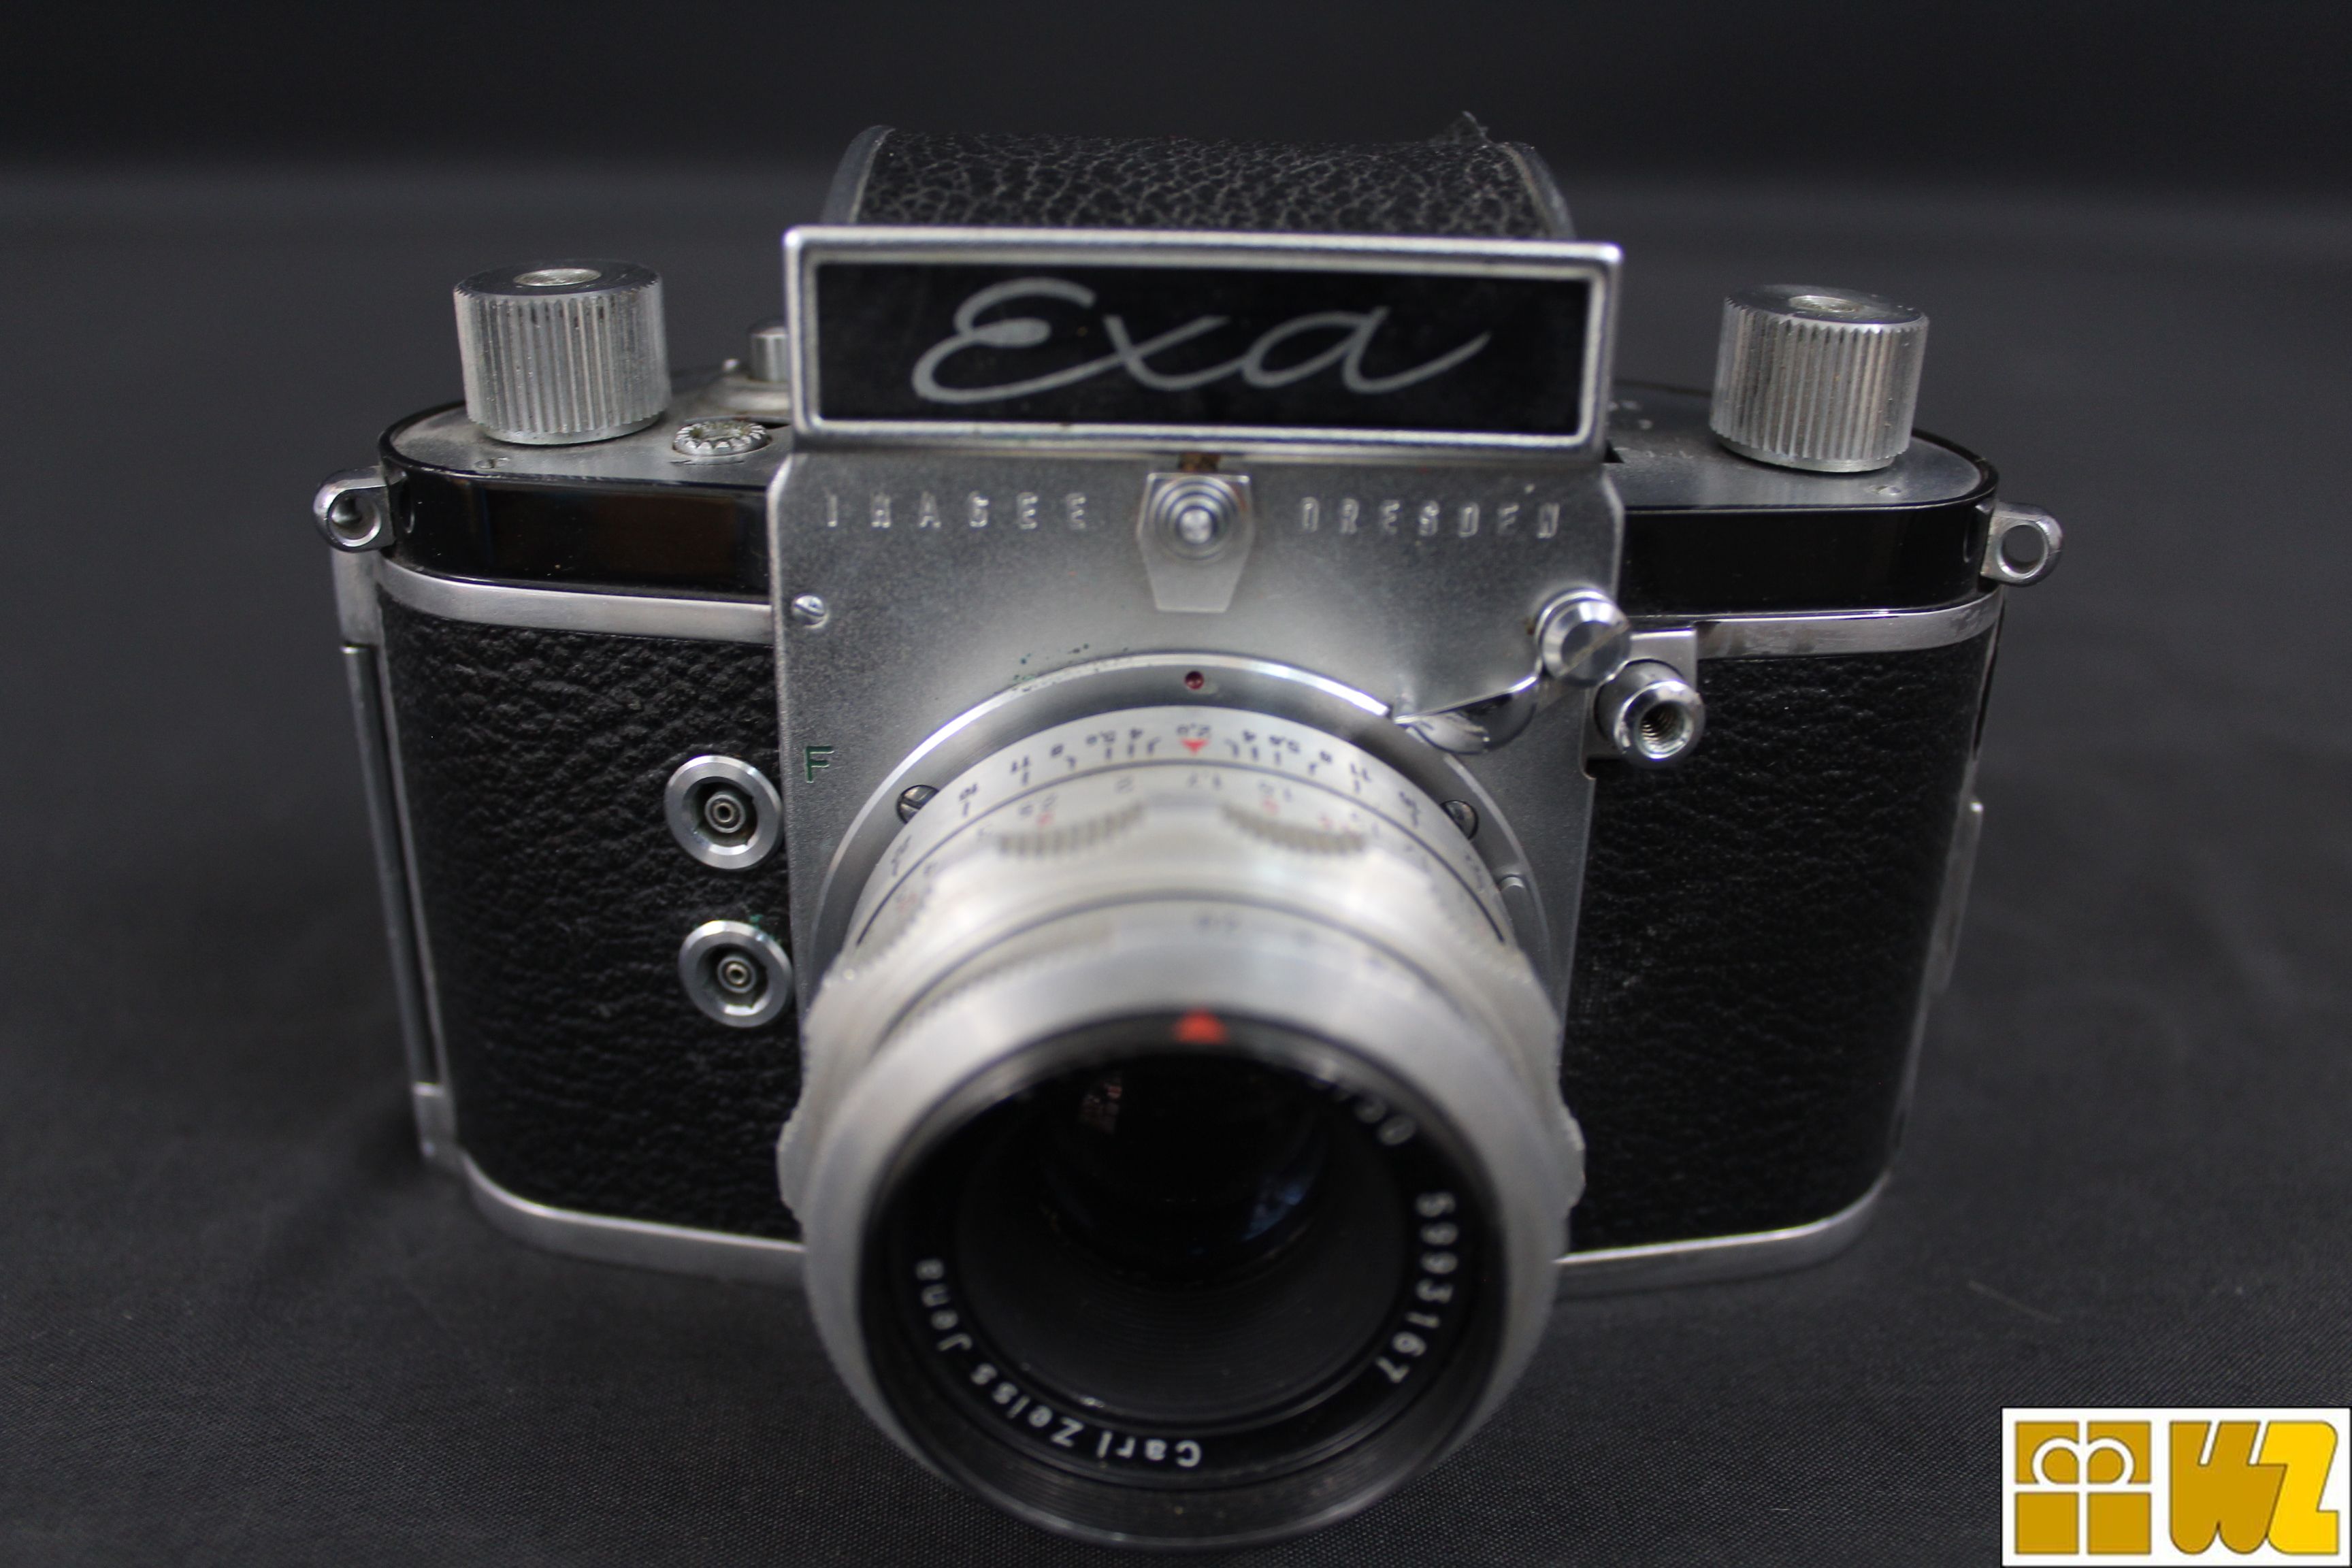 Exa - Ihagee Dresden Modell 1961 Spiegelreflexkamera mit Objektiv Tessar 2,8/50, gebraucht